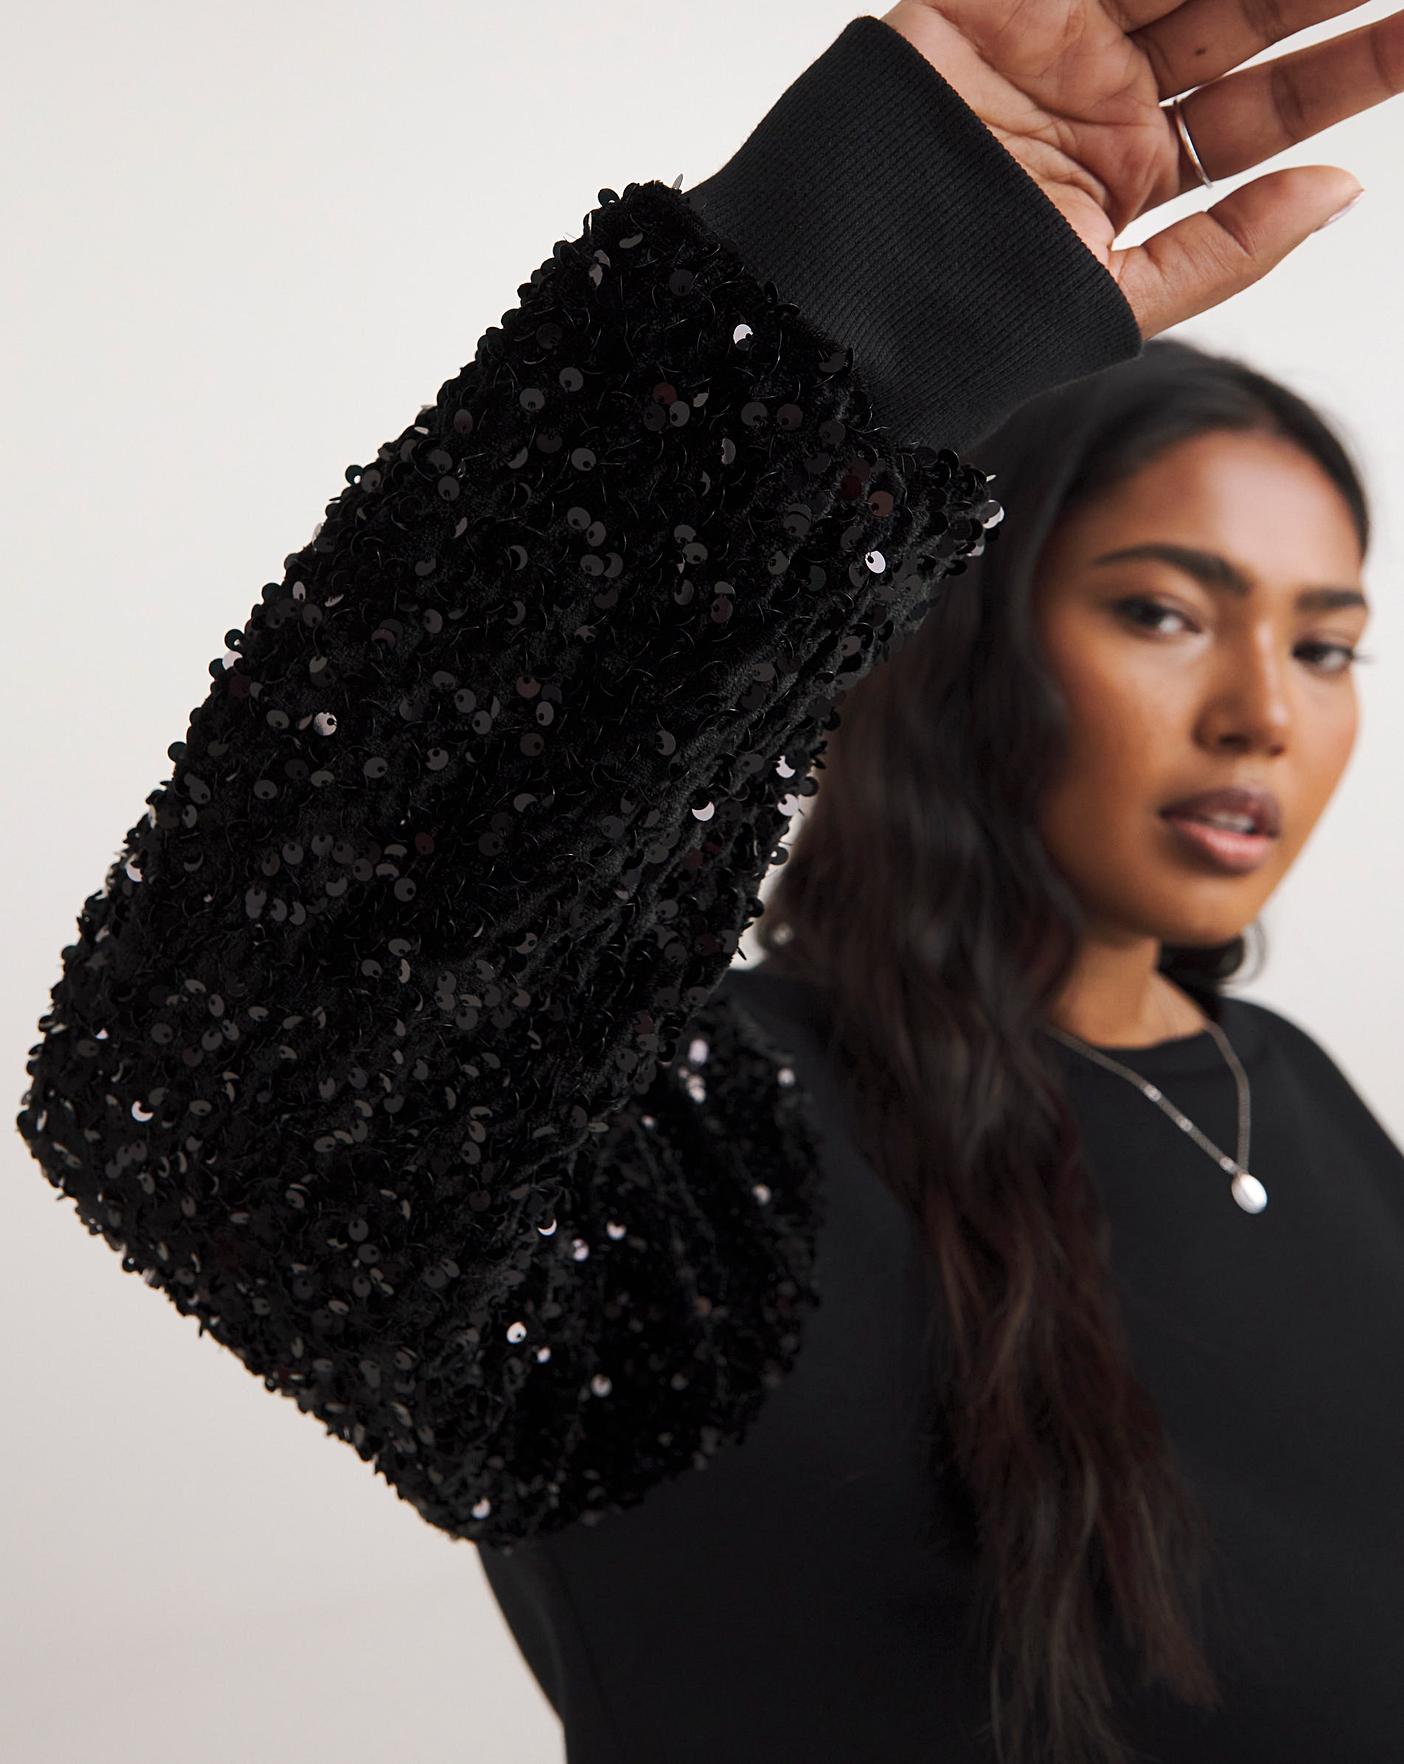 Black Sequin Sleeve Sweatshirt | Fashion World